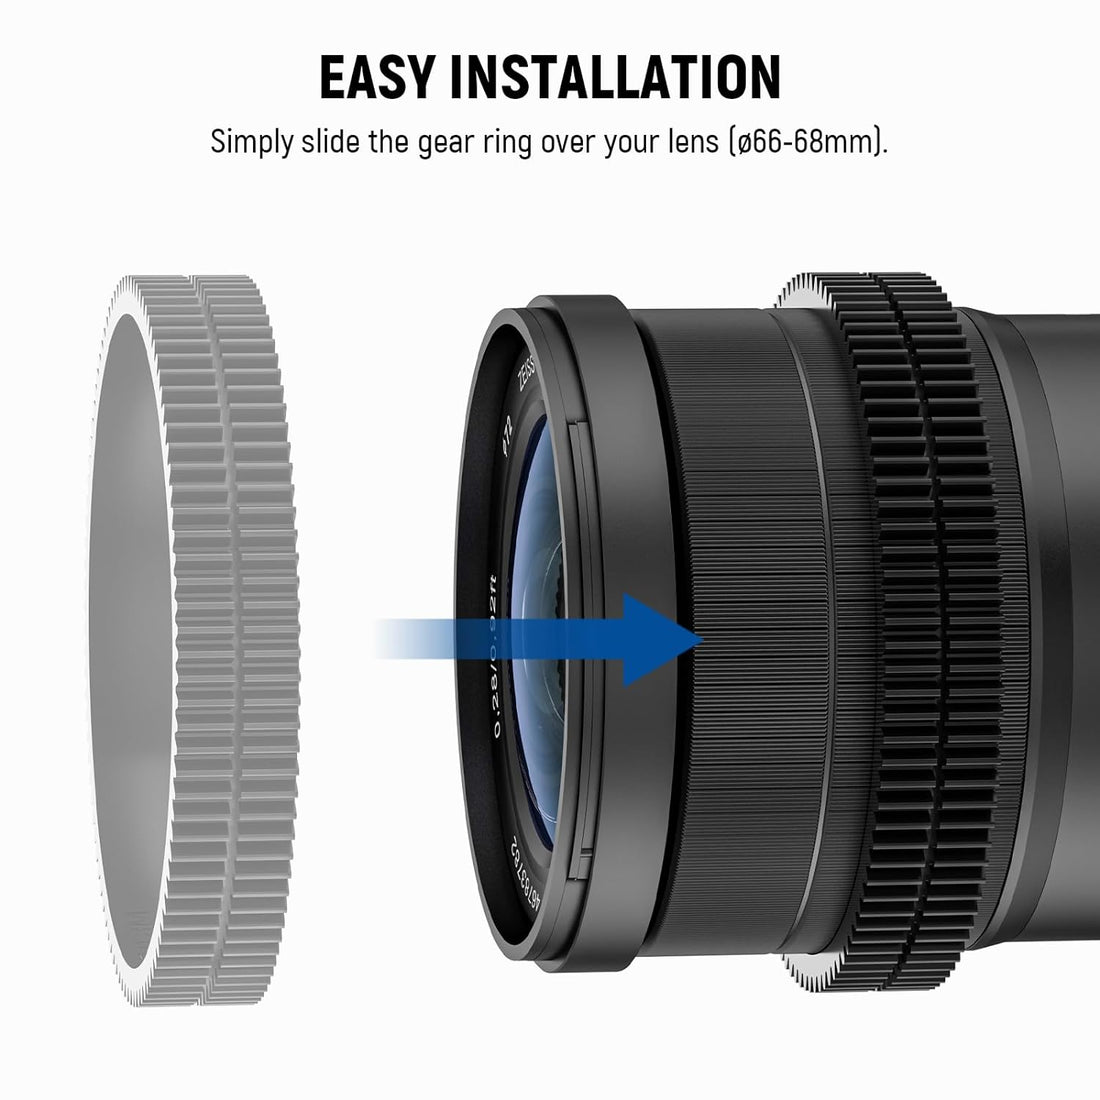 NEEWER PG008 Seamless Follow Focus Gear Ring 0.8 MOD for Ãƒ¸66-68mm Lens, Compatible with SmallRig Compatible with Tilta NEEWER Follow Focus for Canon Sony Nikon Fujifilm Panasonic Sigma Lens